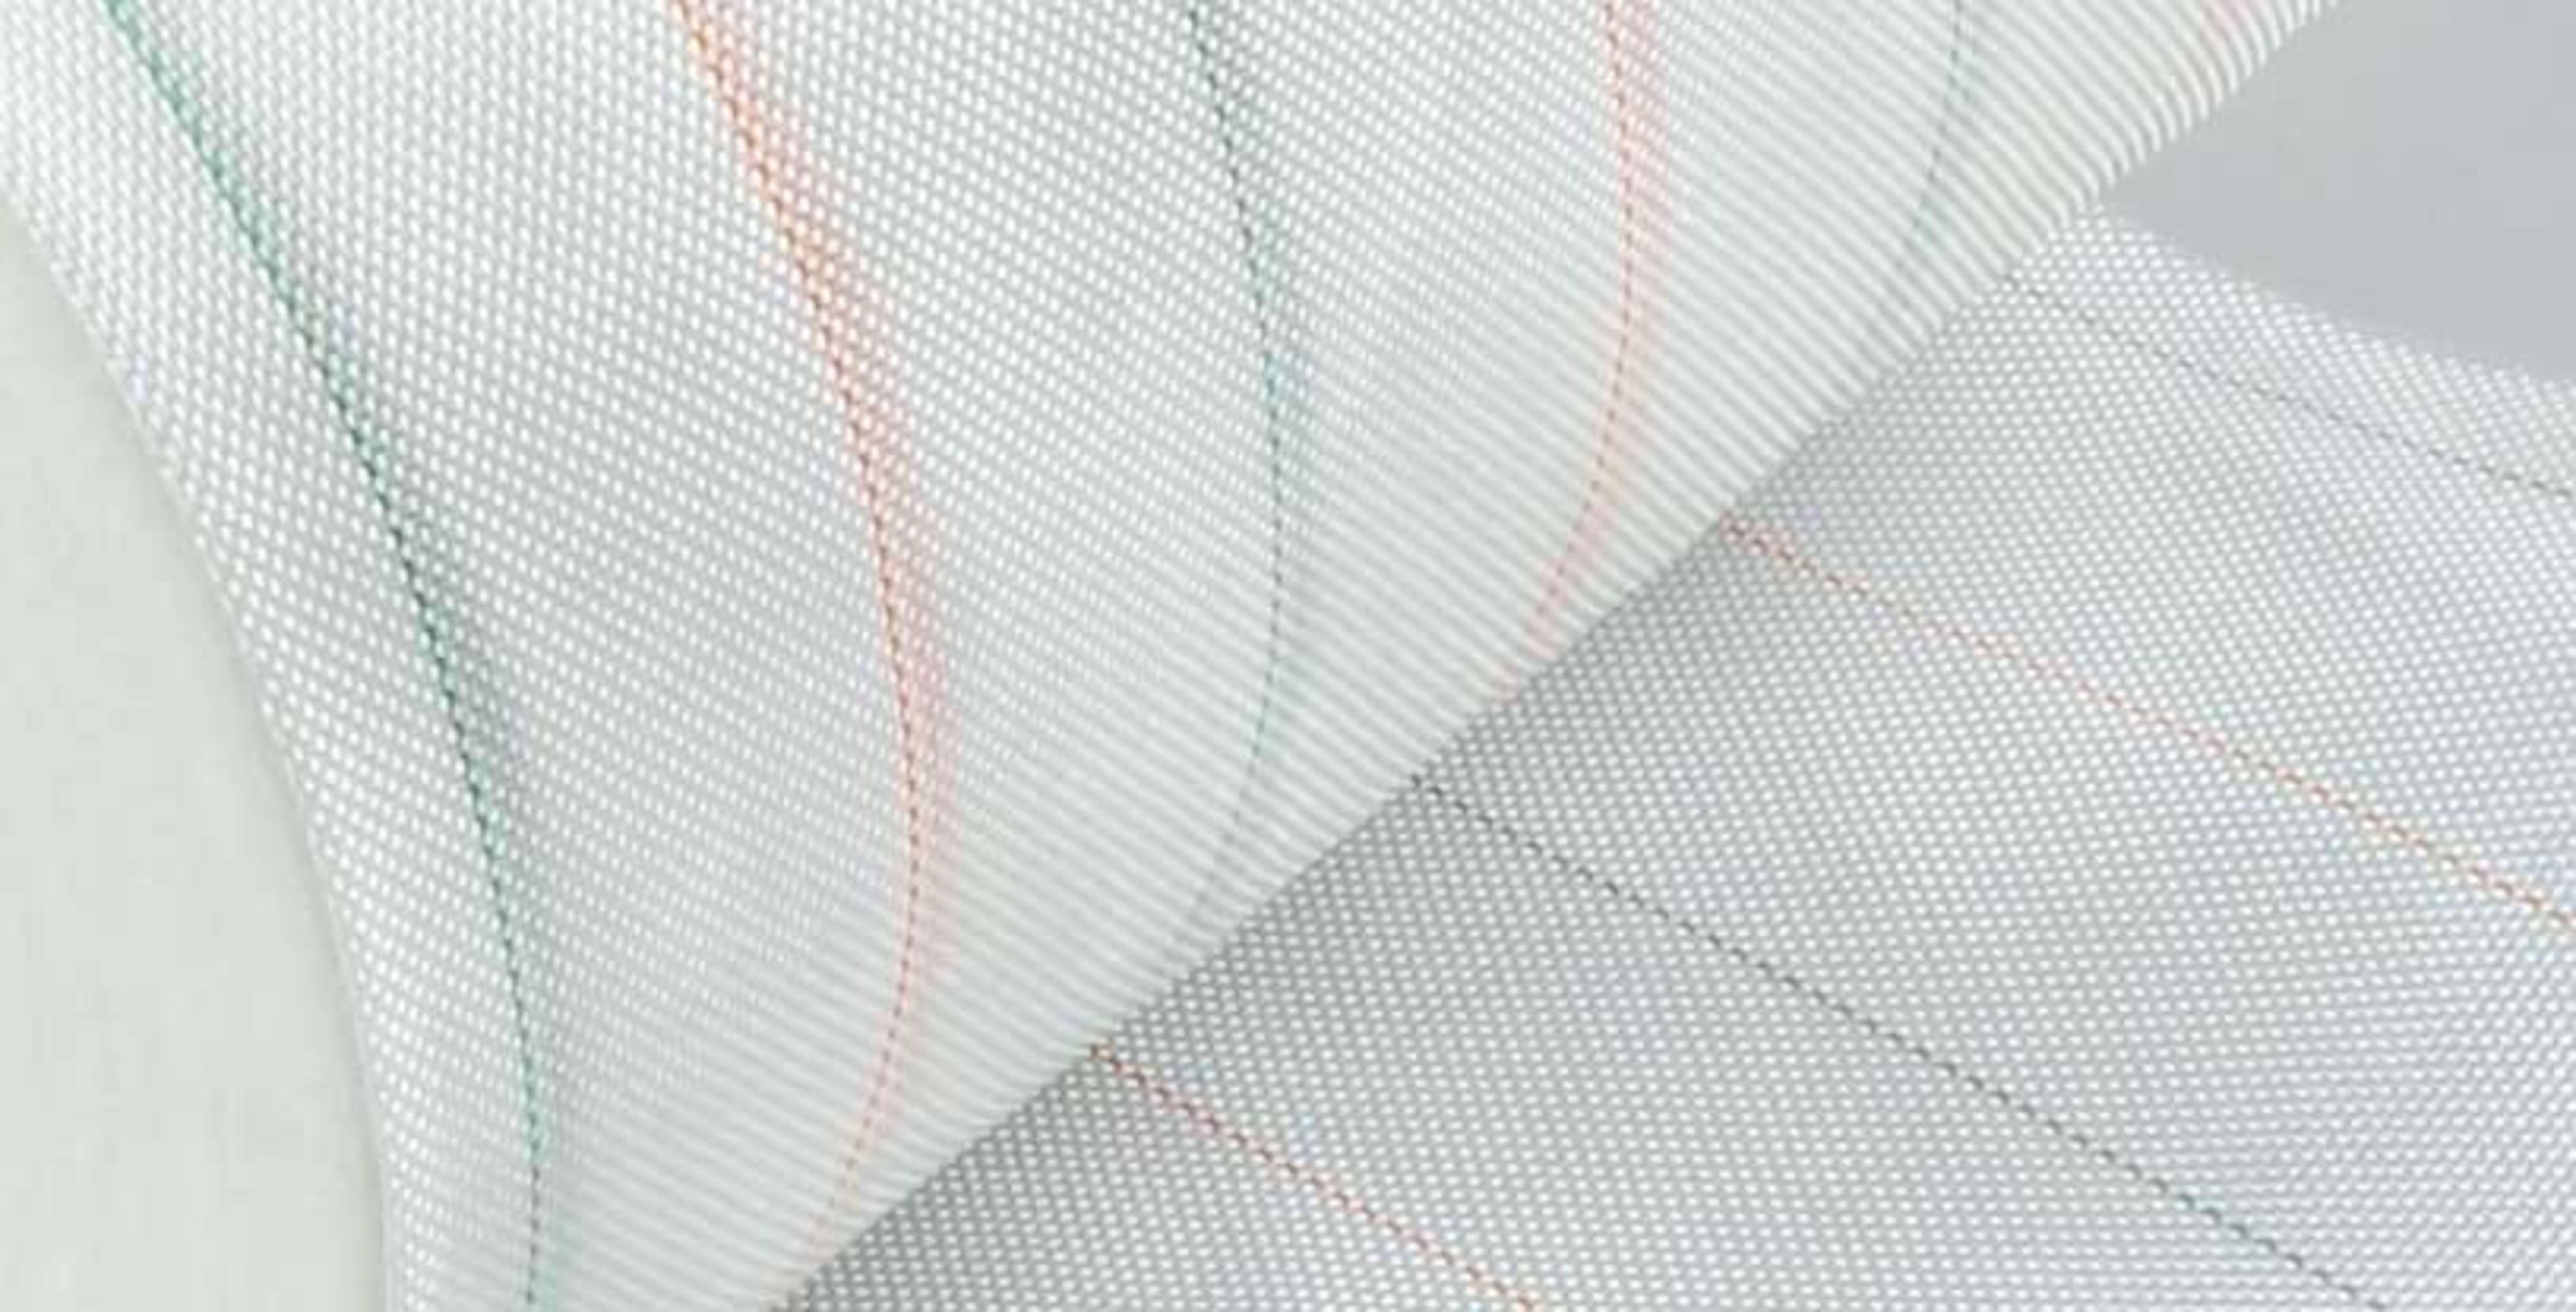 Peel ply PES 90 g/m² (plain weave) 100 cm, image 2